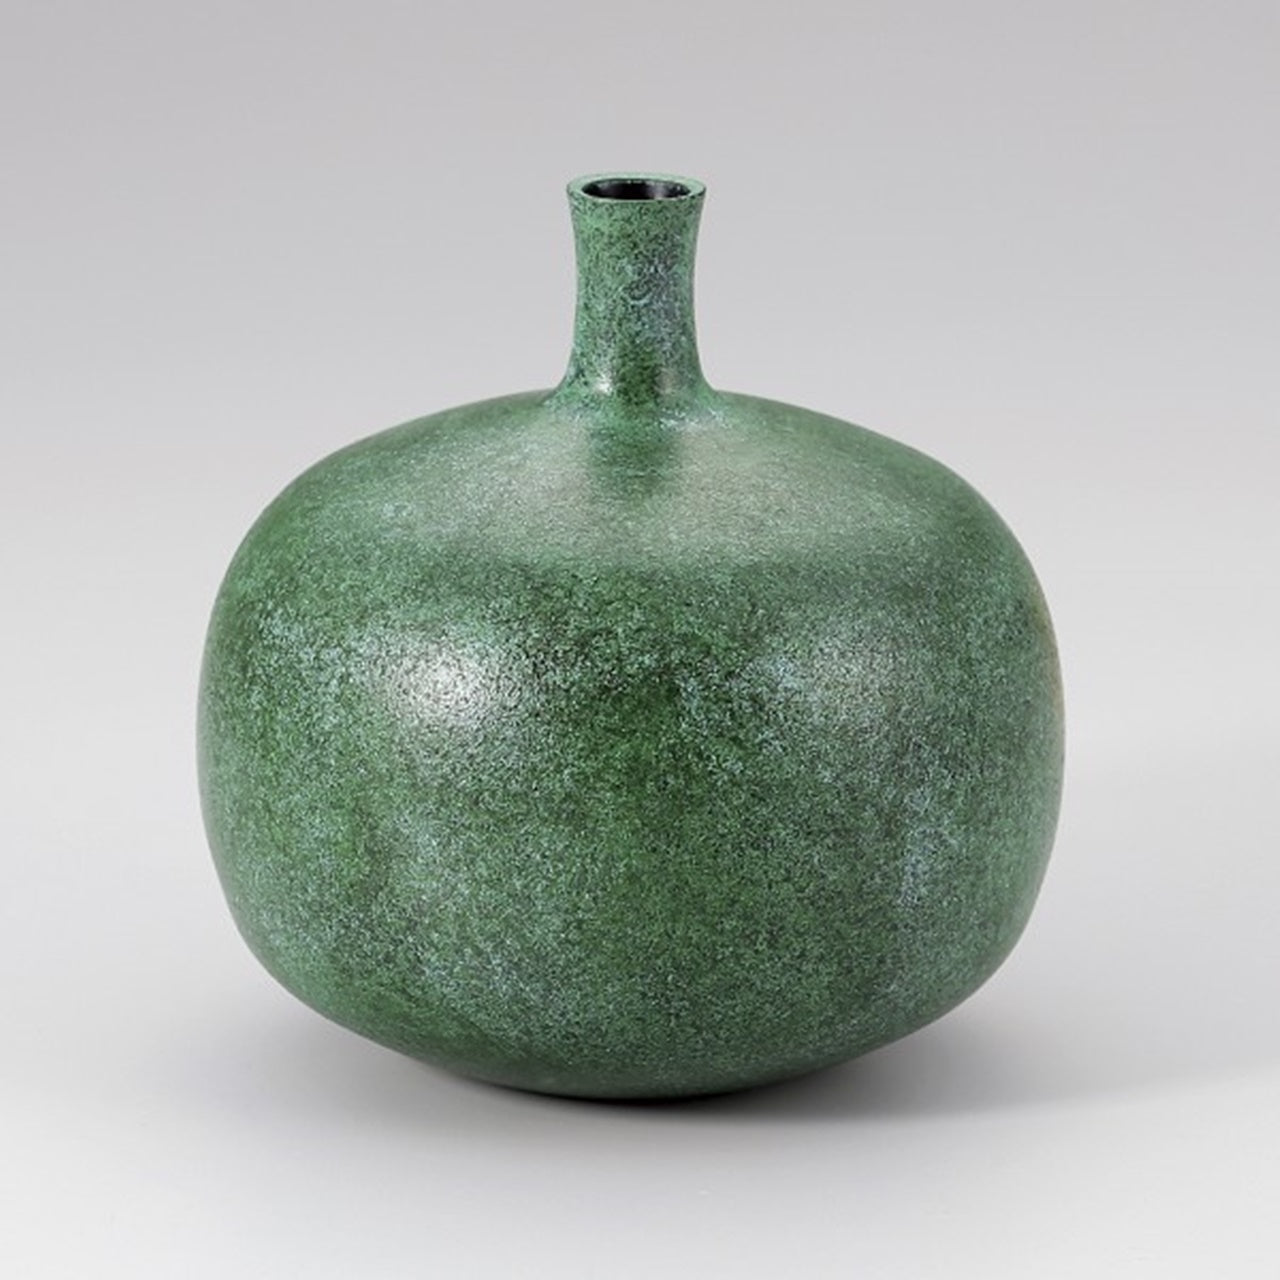 Flower vessel, Vase Newborn - Takaoka copperware, Metalwork